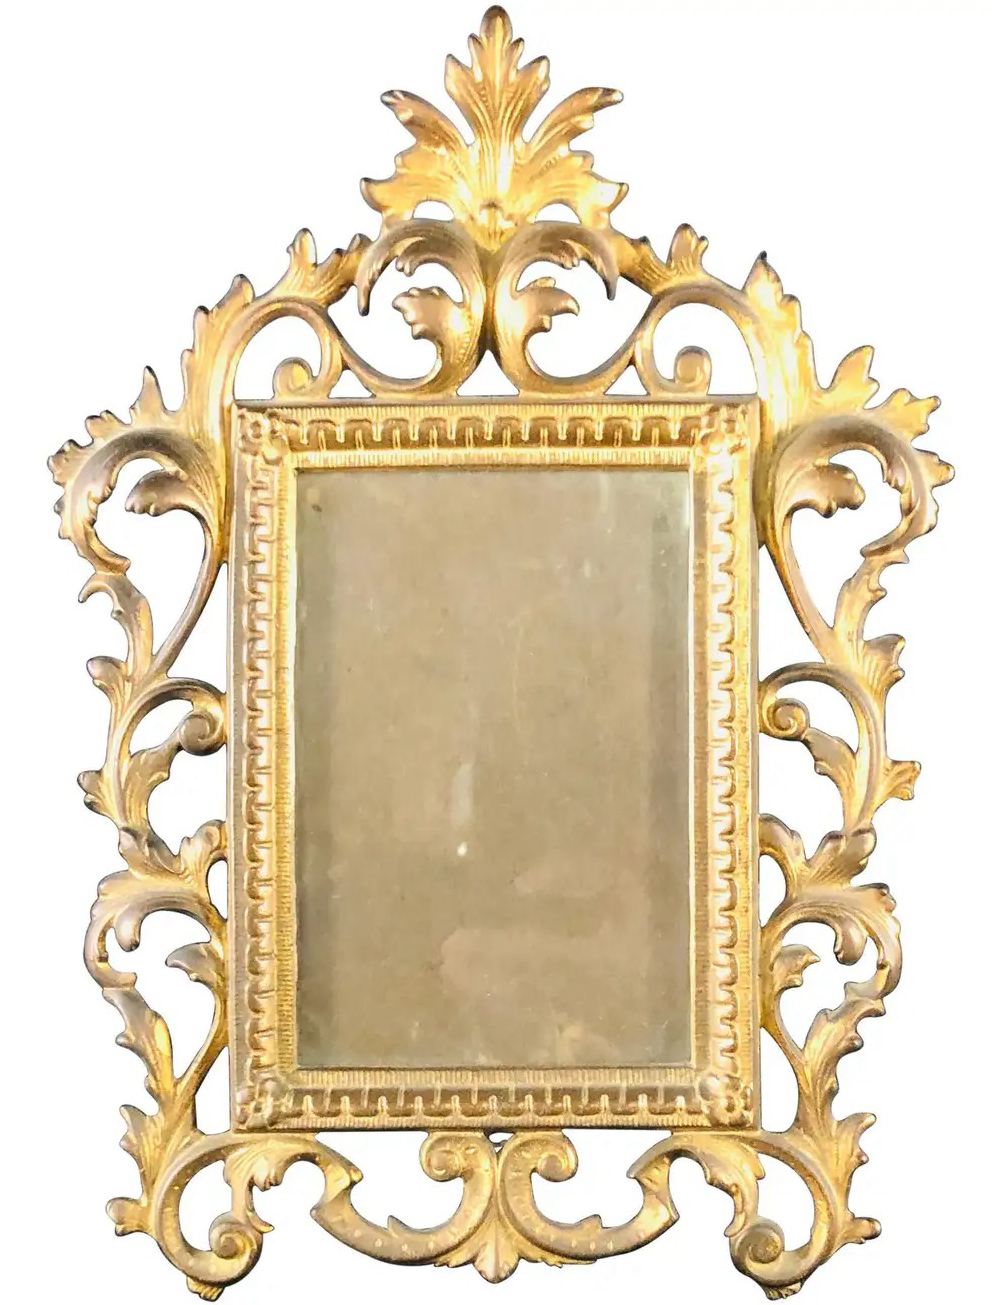 Rococo Style Frame (c. 1740 - c. 1770)